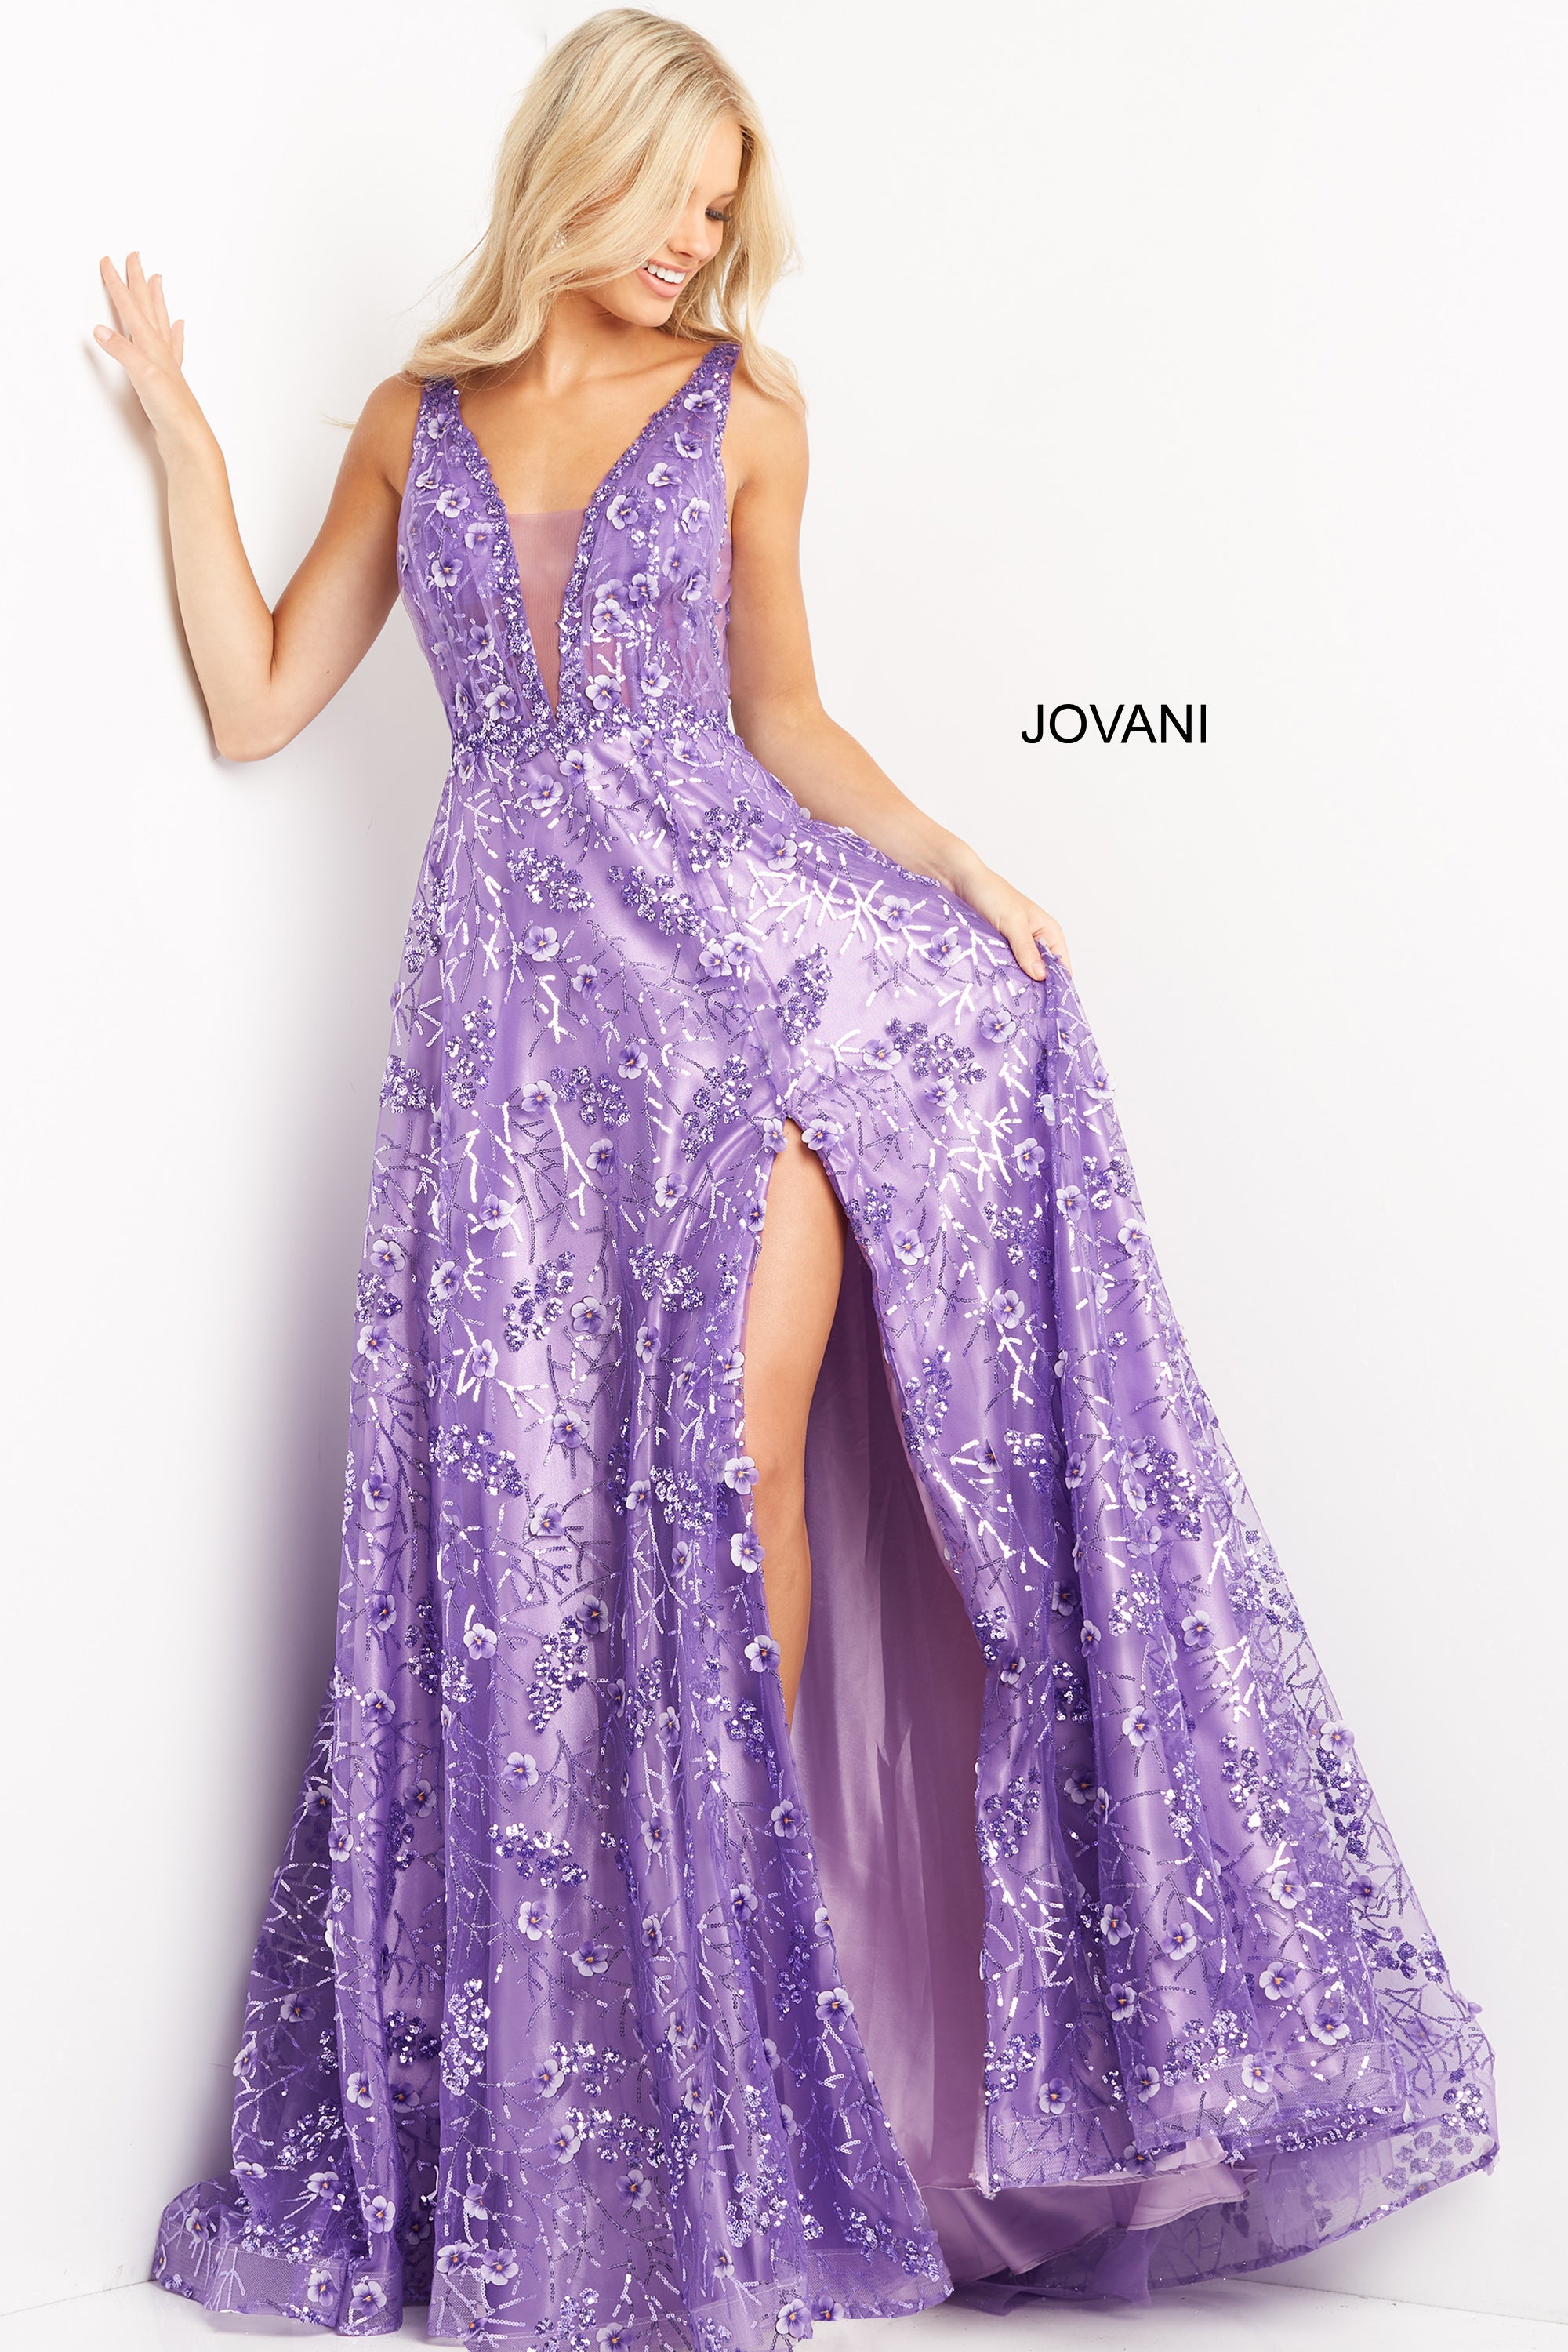 jovani 08422 purple prom dress a line 3d floral flowers plunging